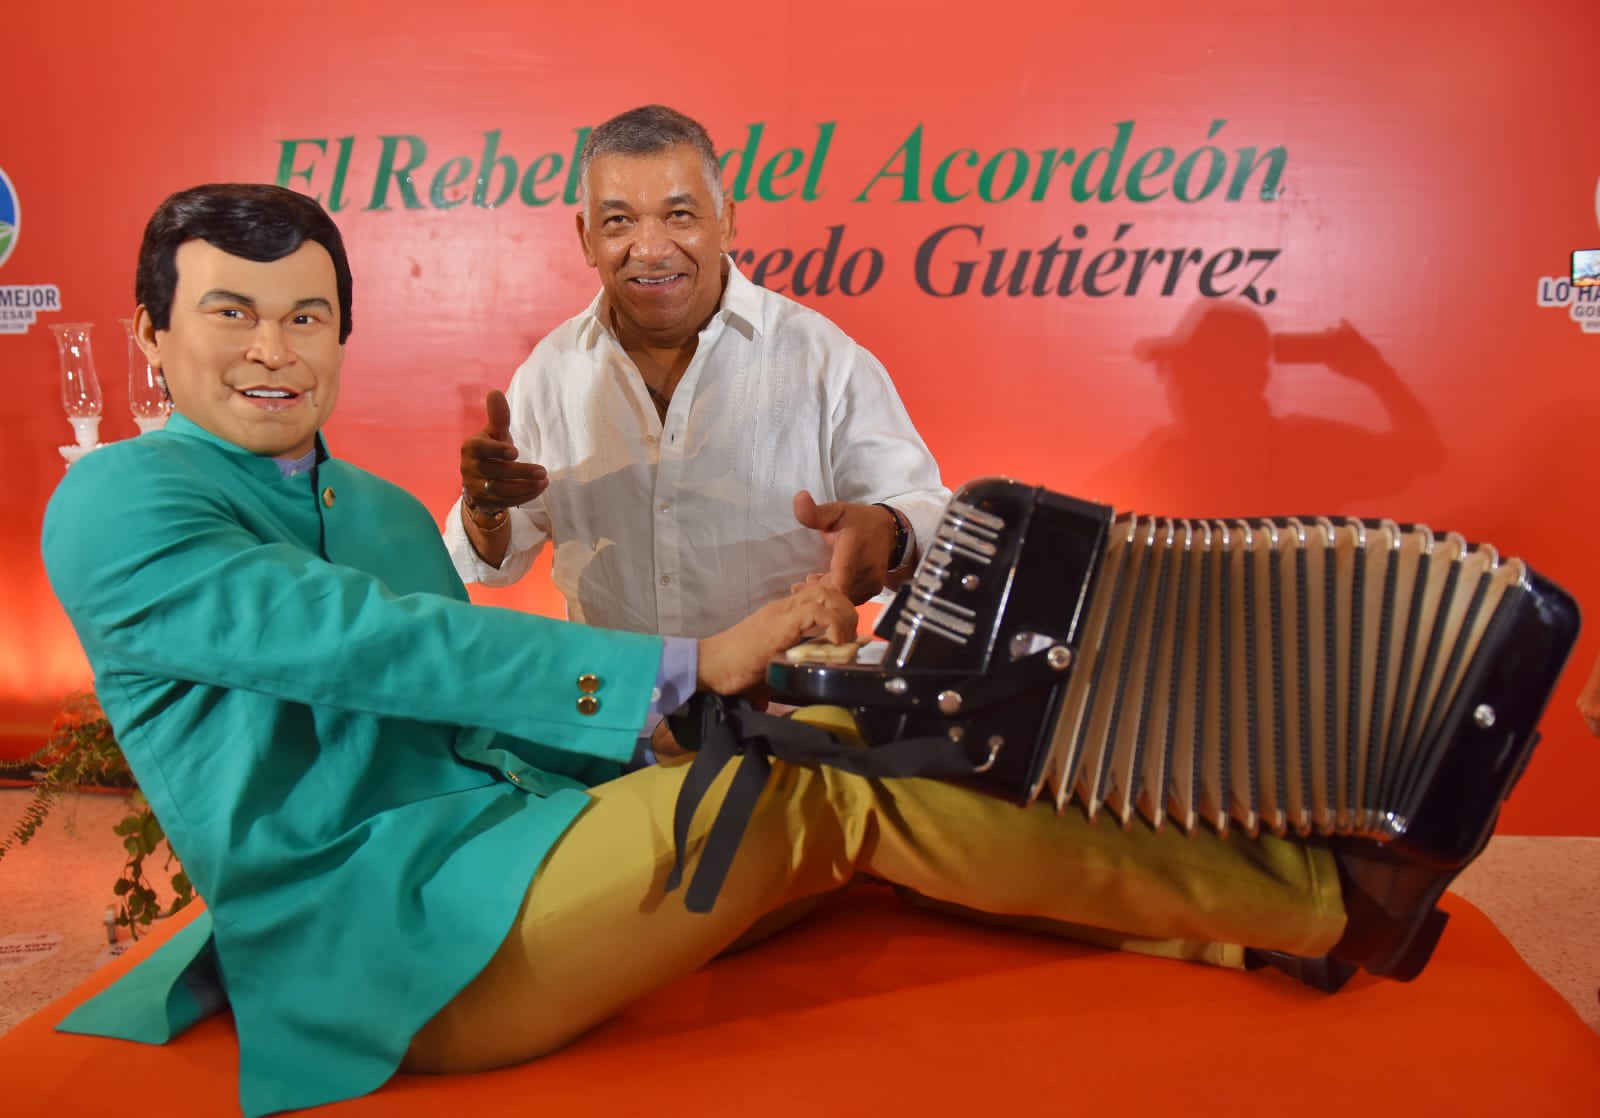 Un seguidor del acordeonero Alfredo Gutiérrez posando junto a la escultura.